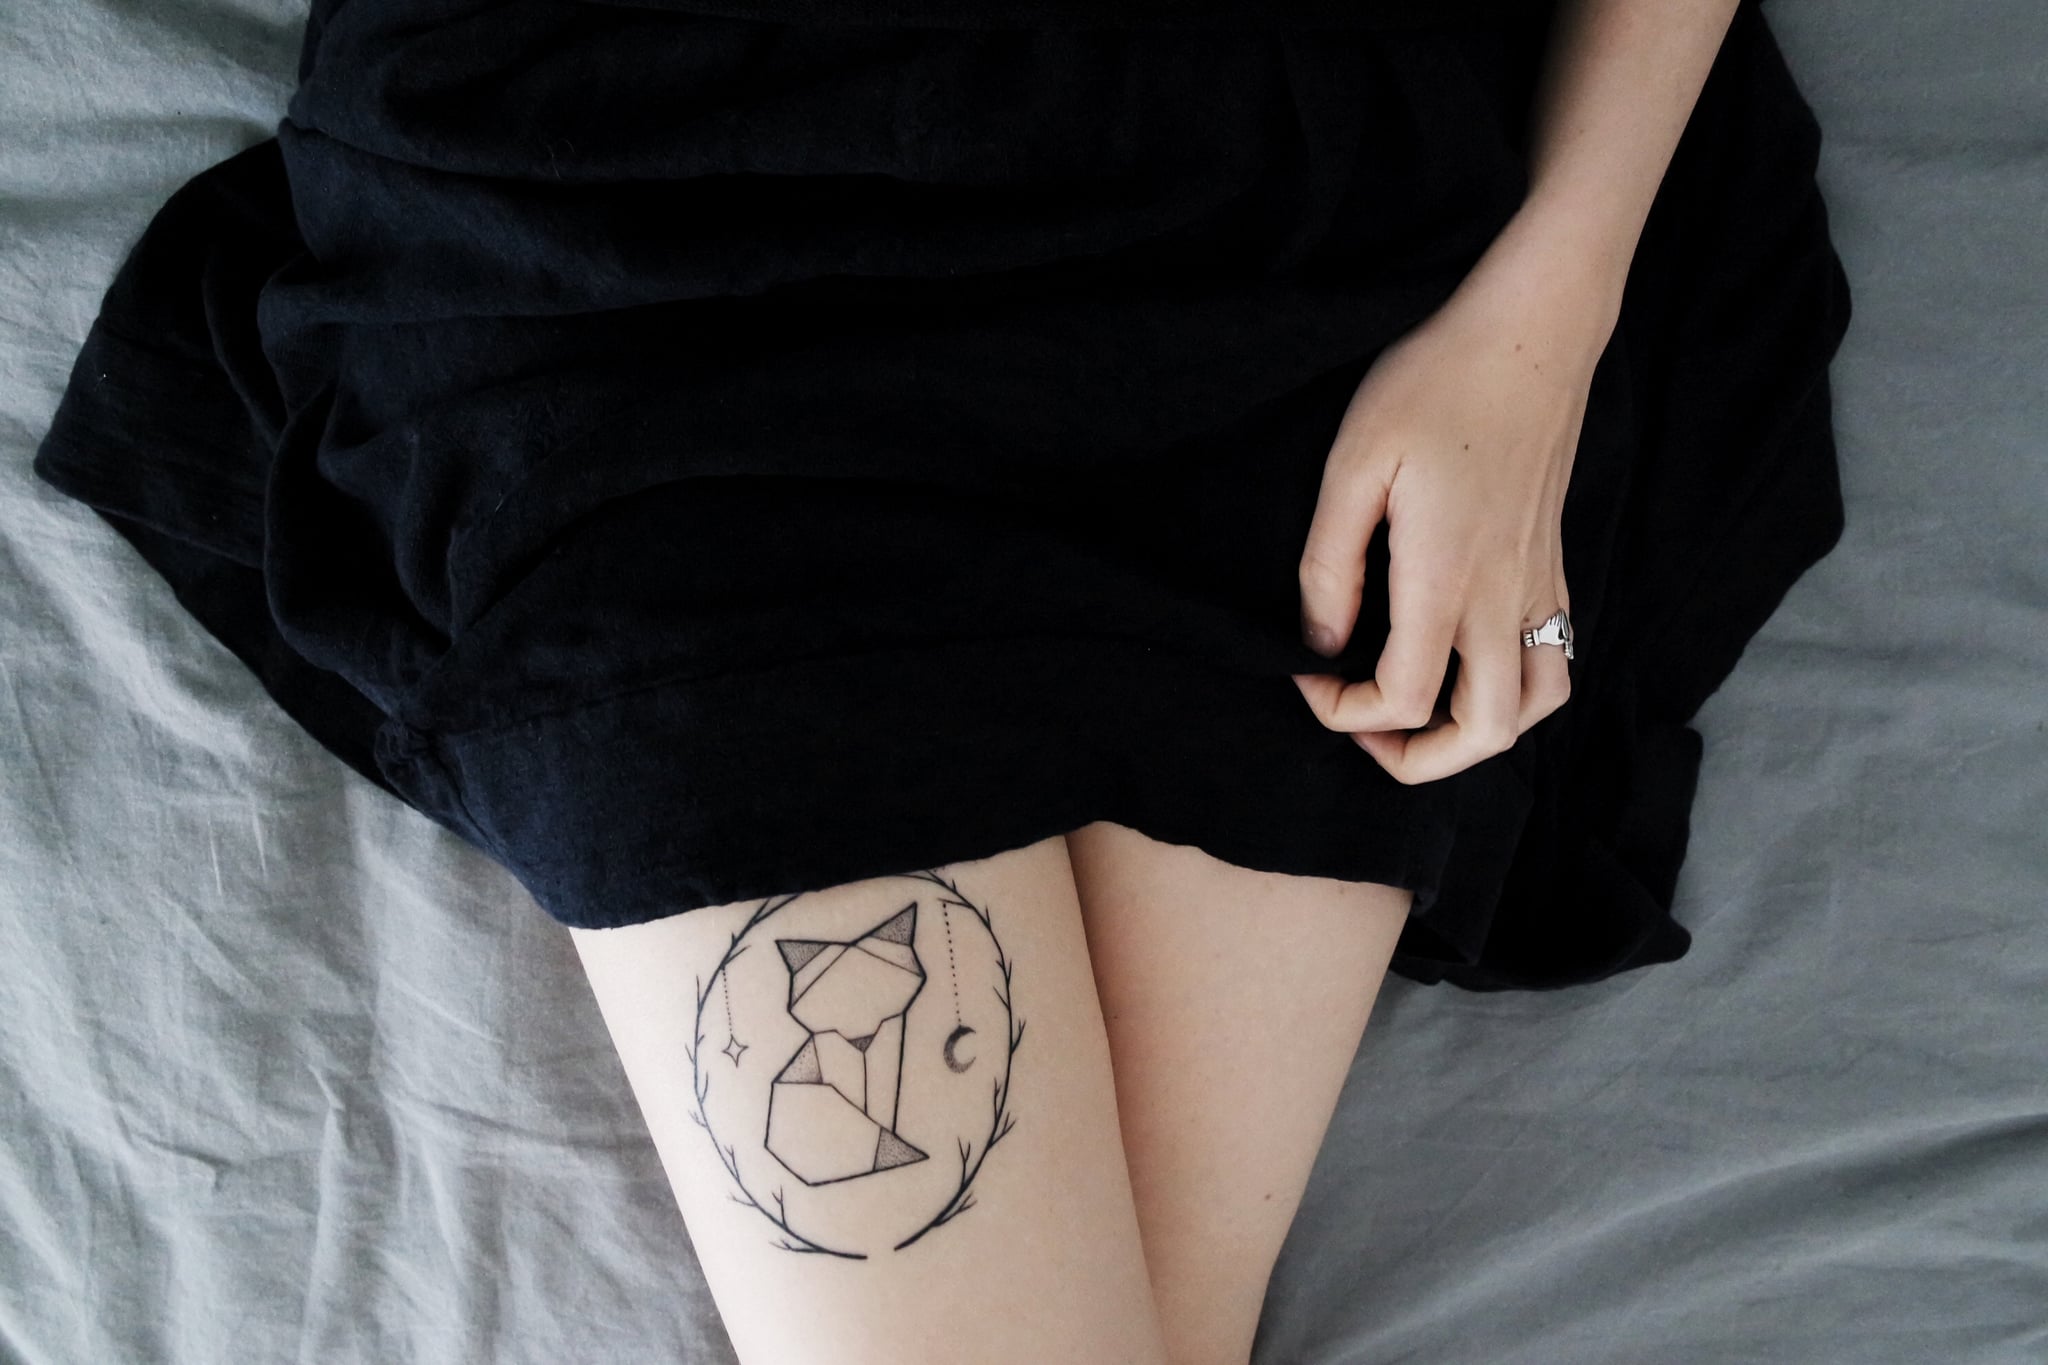 Tattoo Ideas Based on Zodiac Signs | POPSUGAR Love & Sex